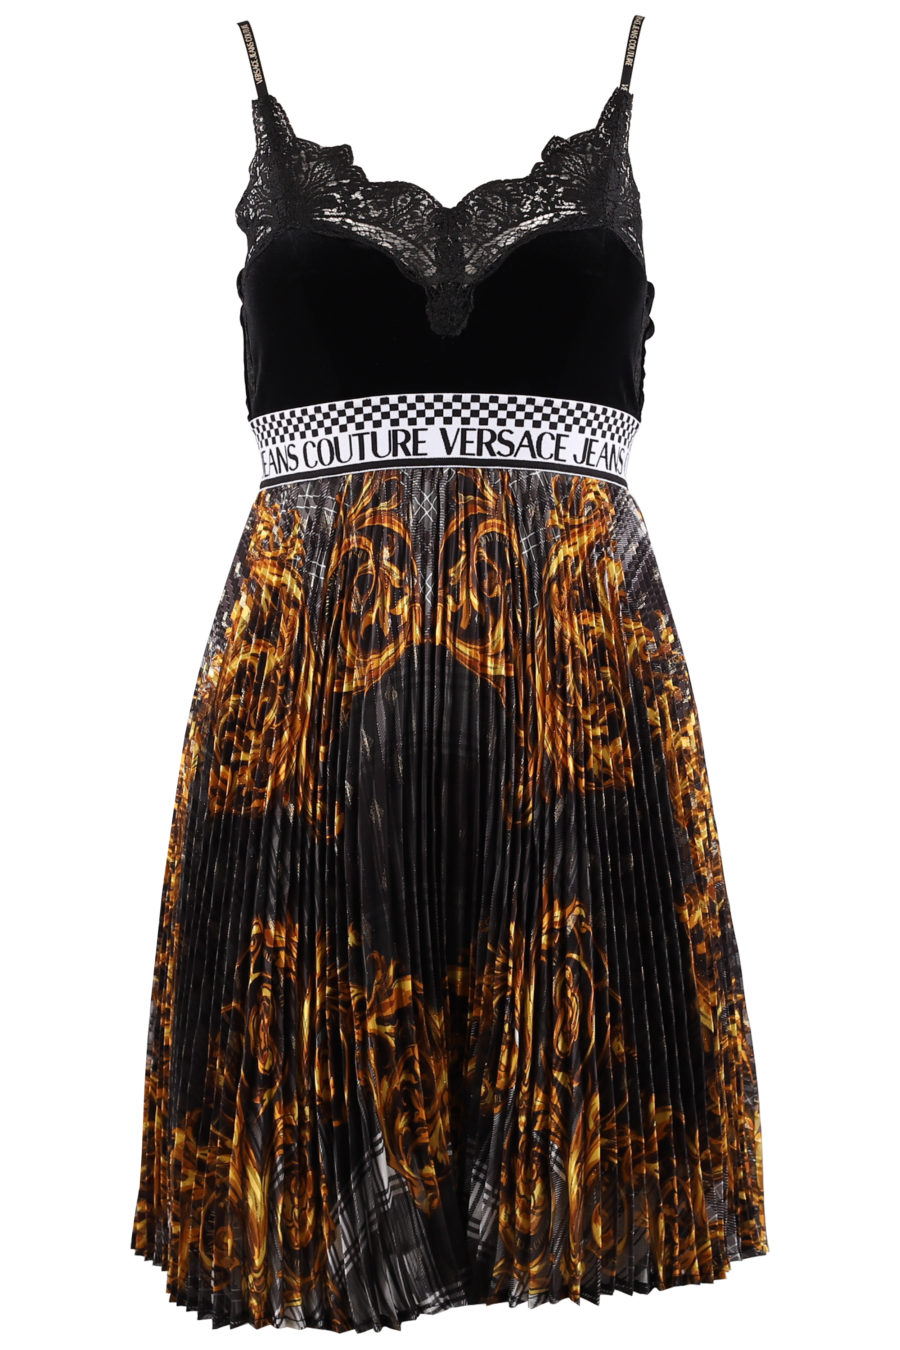 Schwarzes Kleid mit goldenem Barockdruck - 4eebbe4d56efa0ef03b8c52cf628df89f9f8b7eb